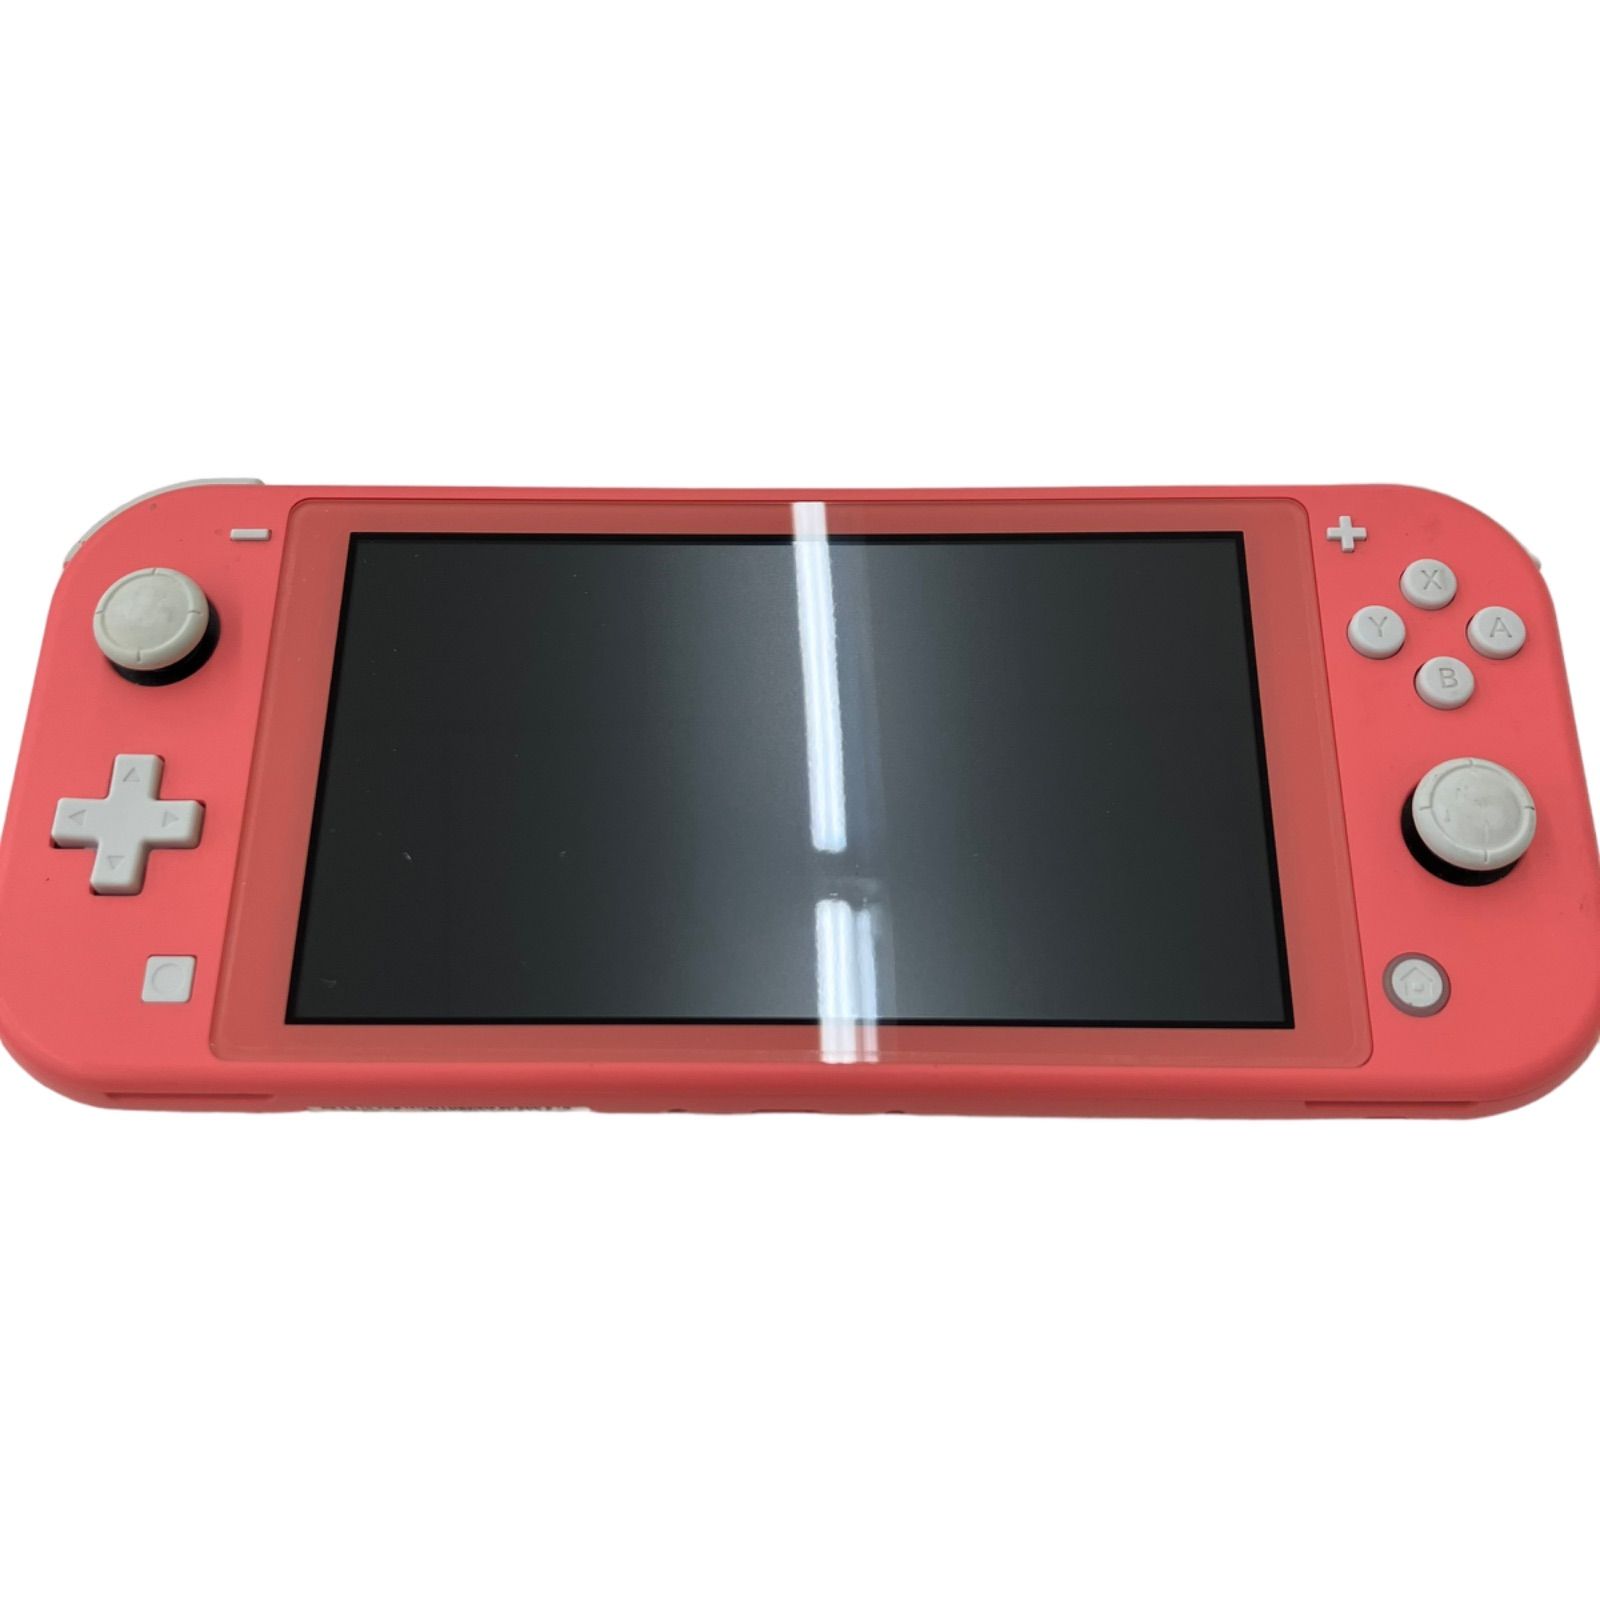 Nintendo Switch Light コーラルピンク ジャンク品 - メルカリ